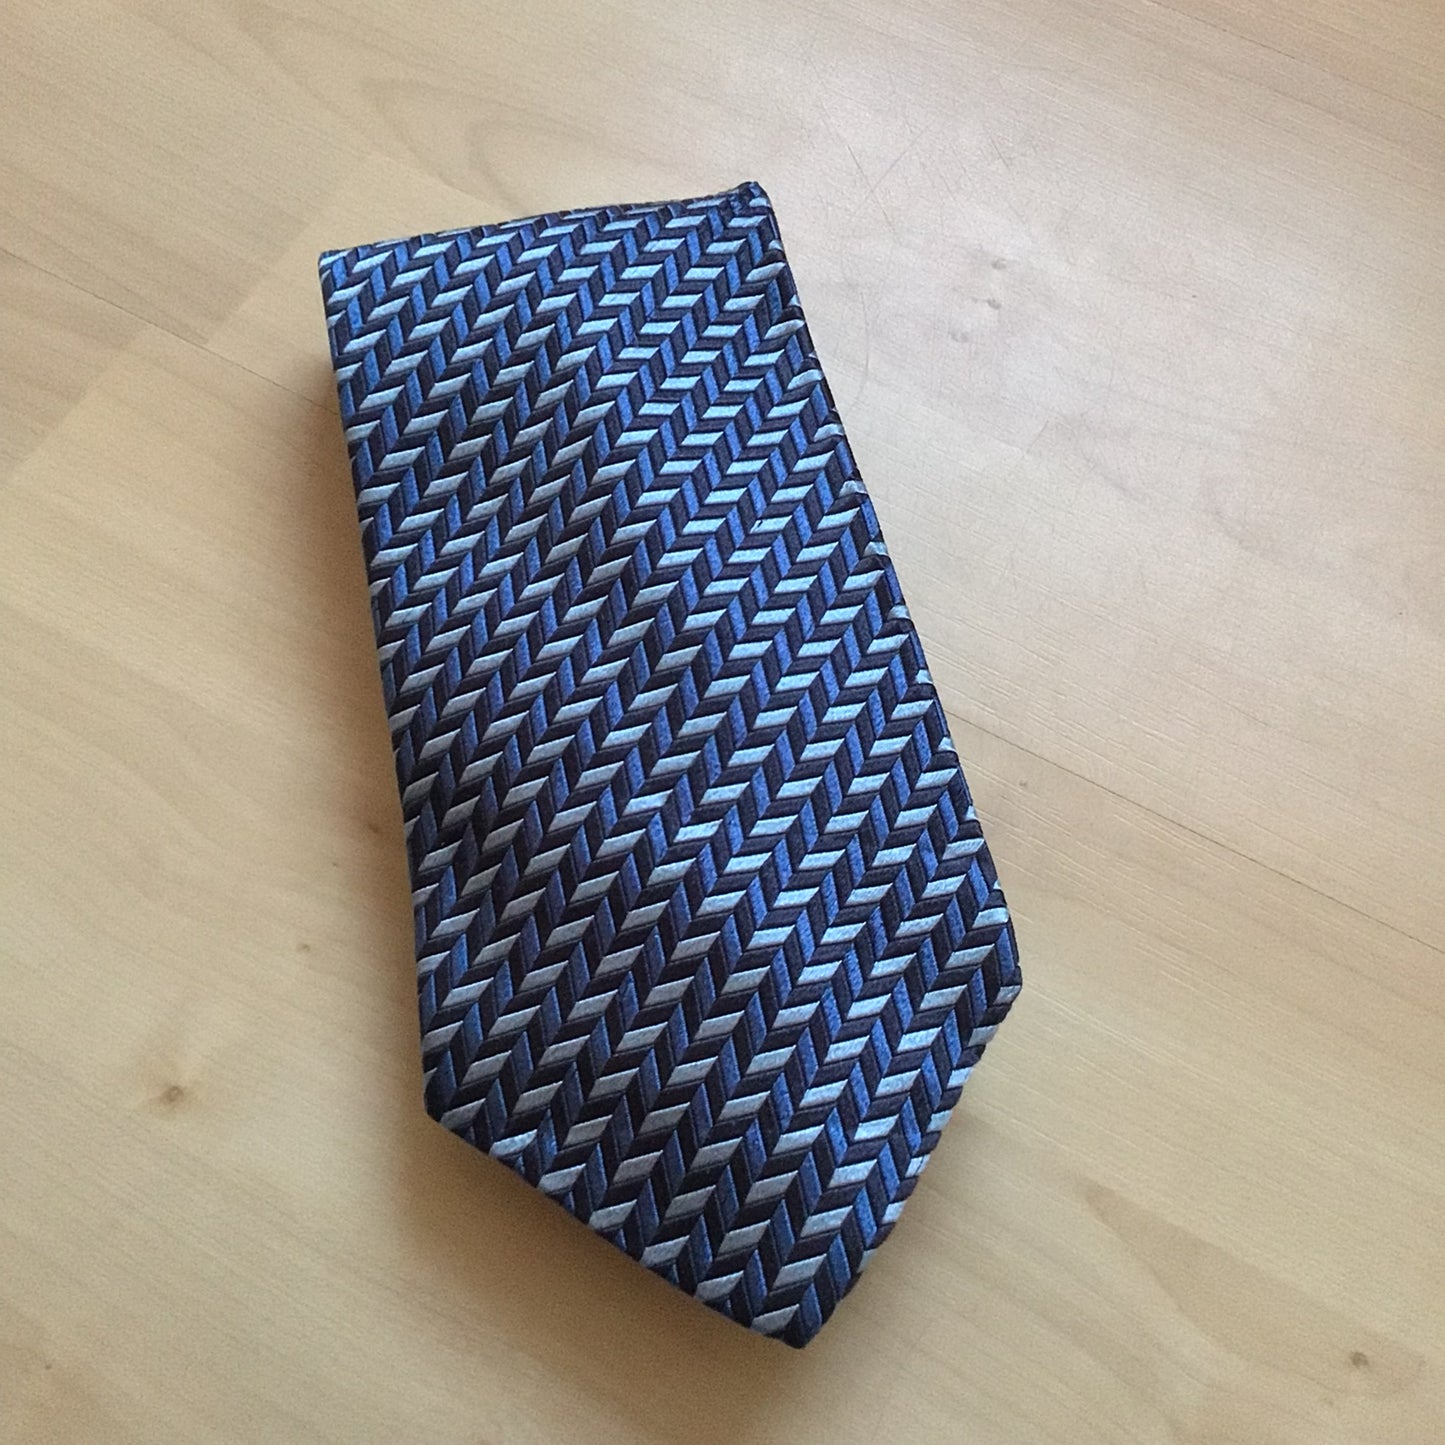 Balmain Paris Blue Patterned Tie 100% Silk Made in Italy